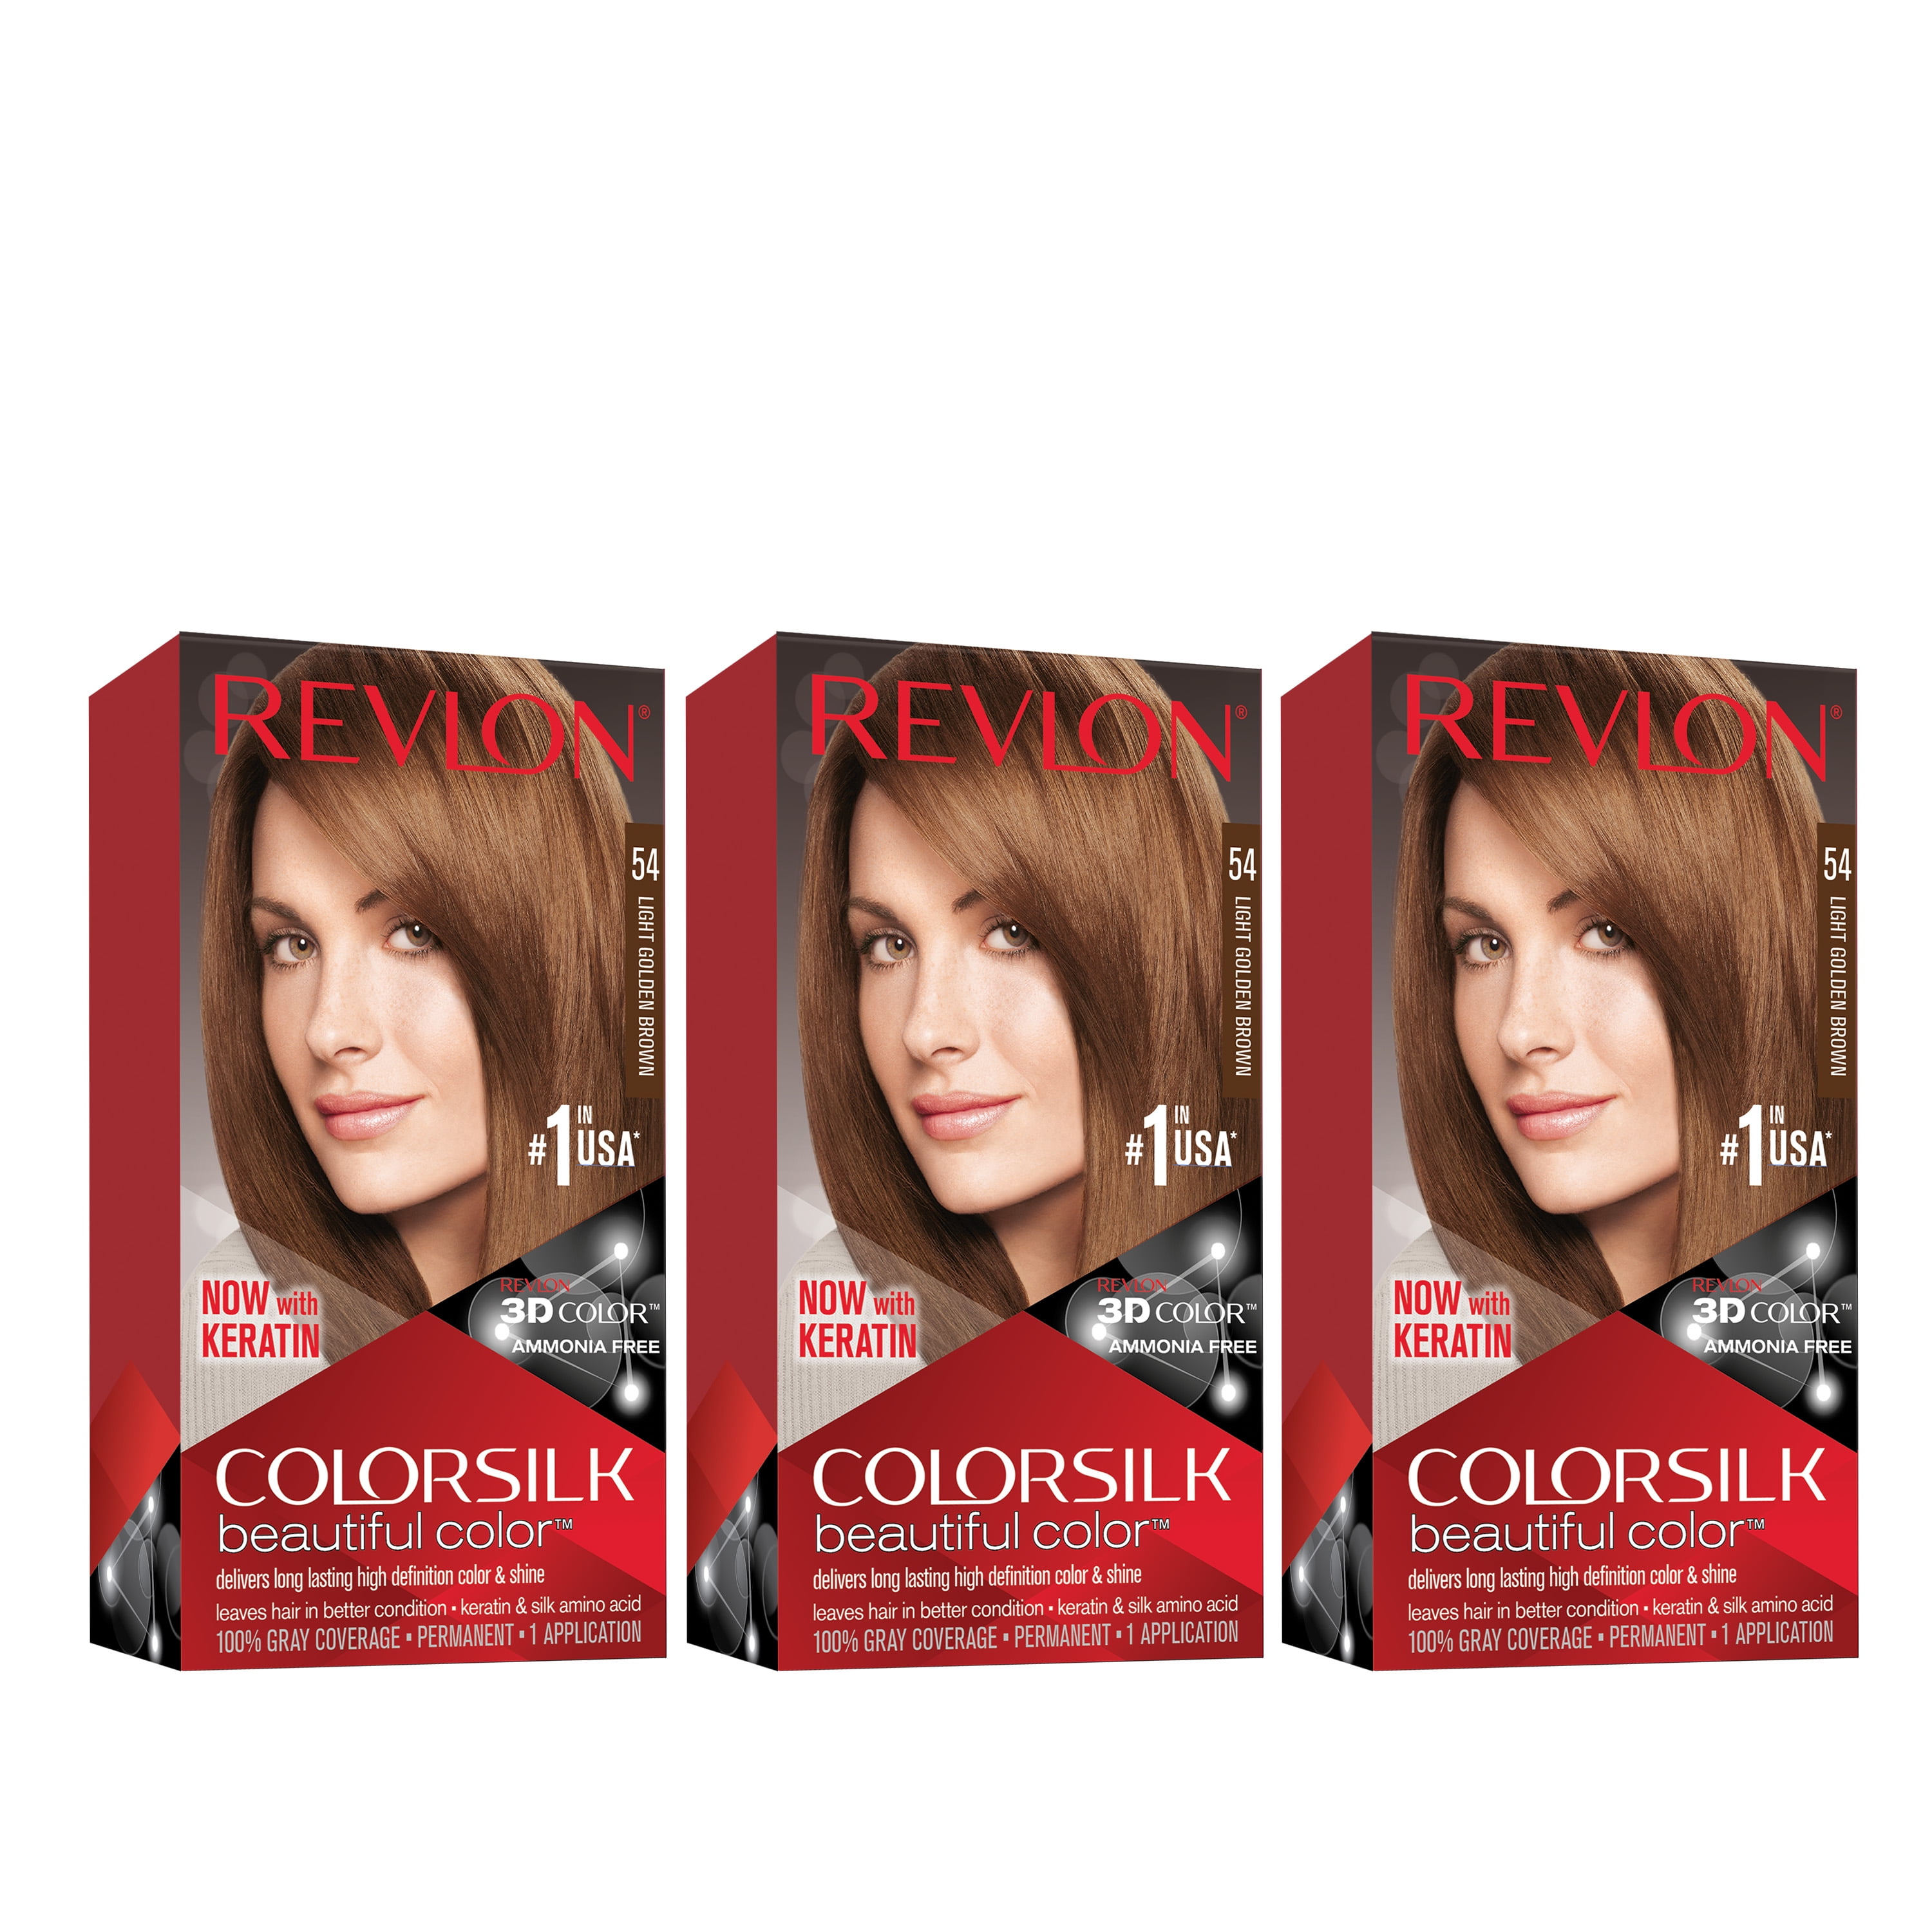 Revlon ColorSilk Beautiful Permanent Hair Dye, Dark Brown, At Home Full  Coverage Application Kit, 54 Light Golden Brown, 3 Pack 